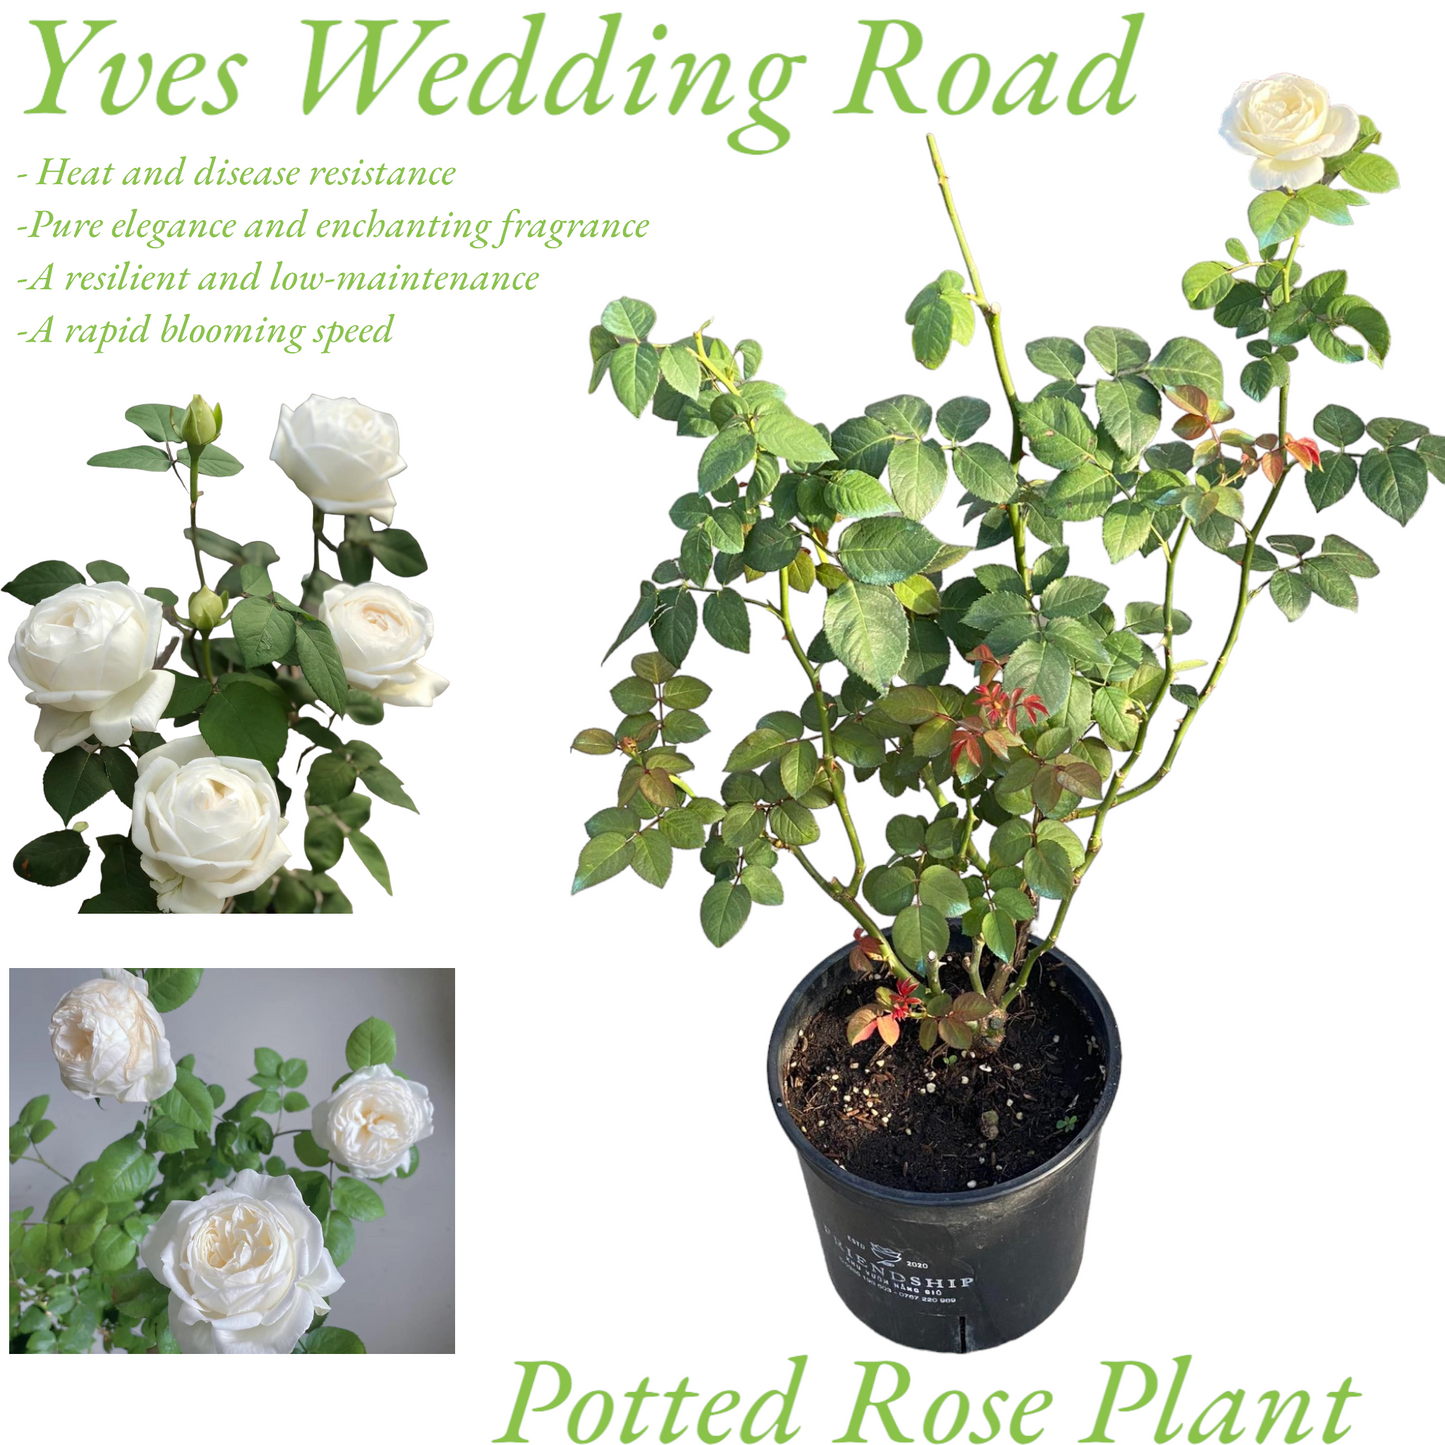 Yves Wedding Road